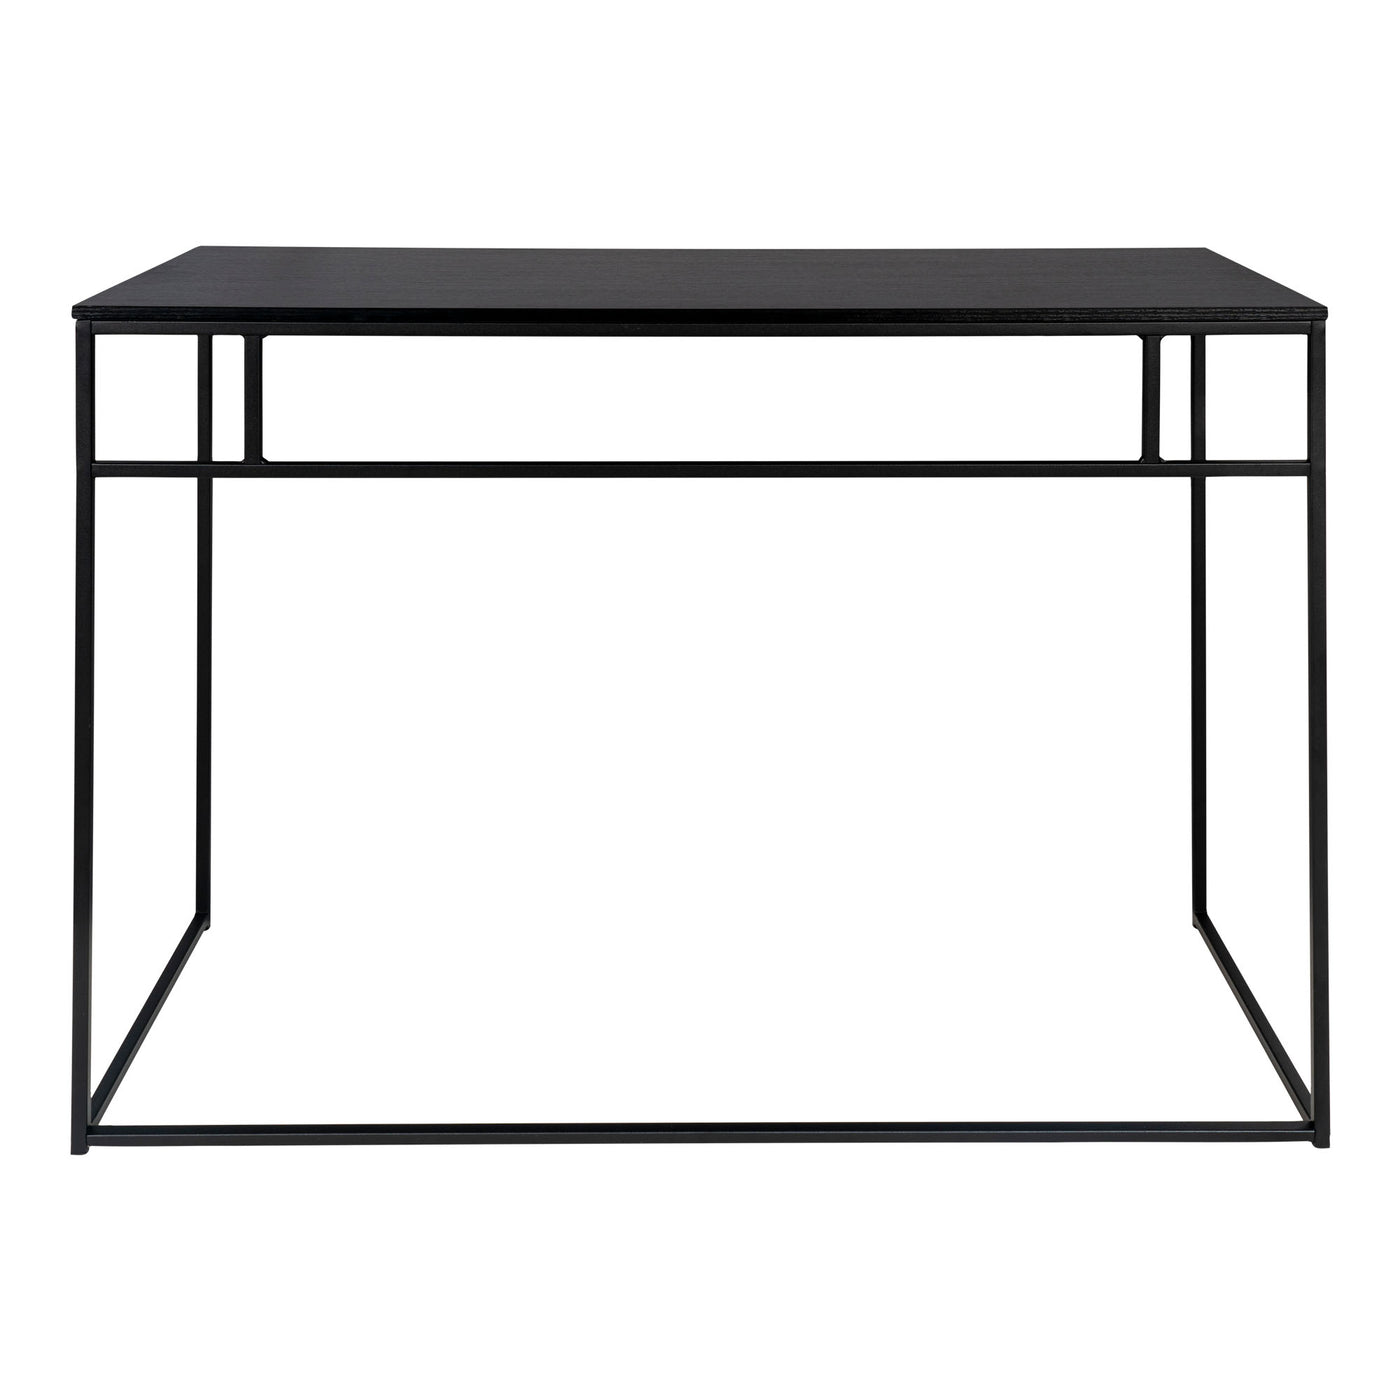 Vita pöytä 100 x 45 cm, musta - Mööpeli.com